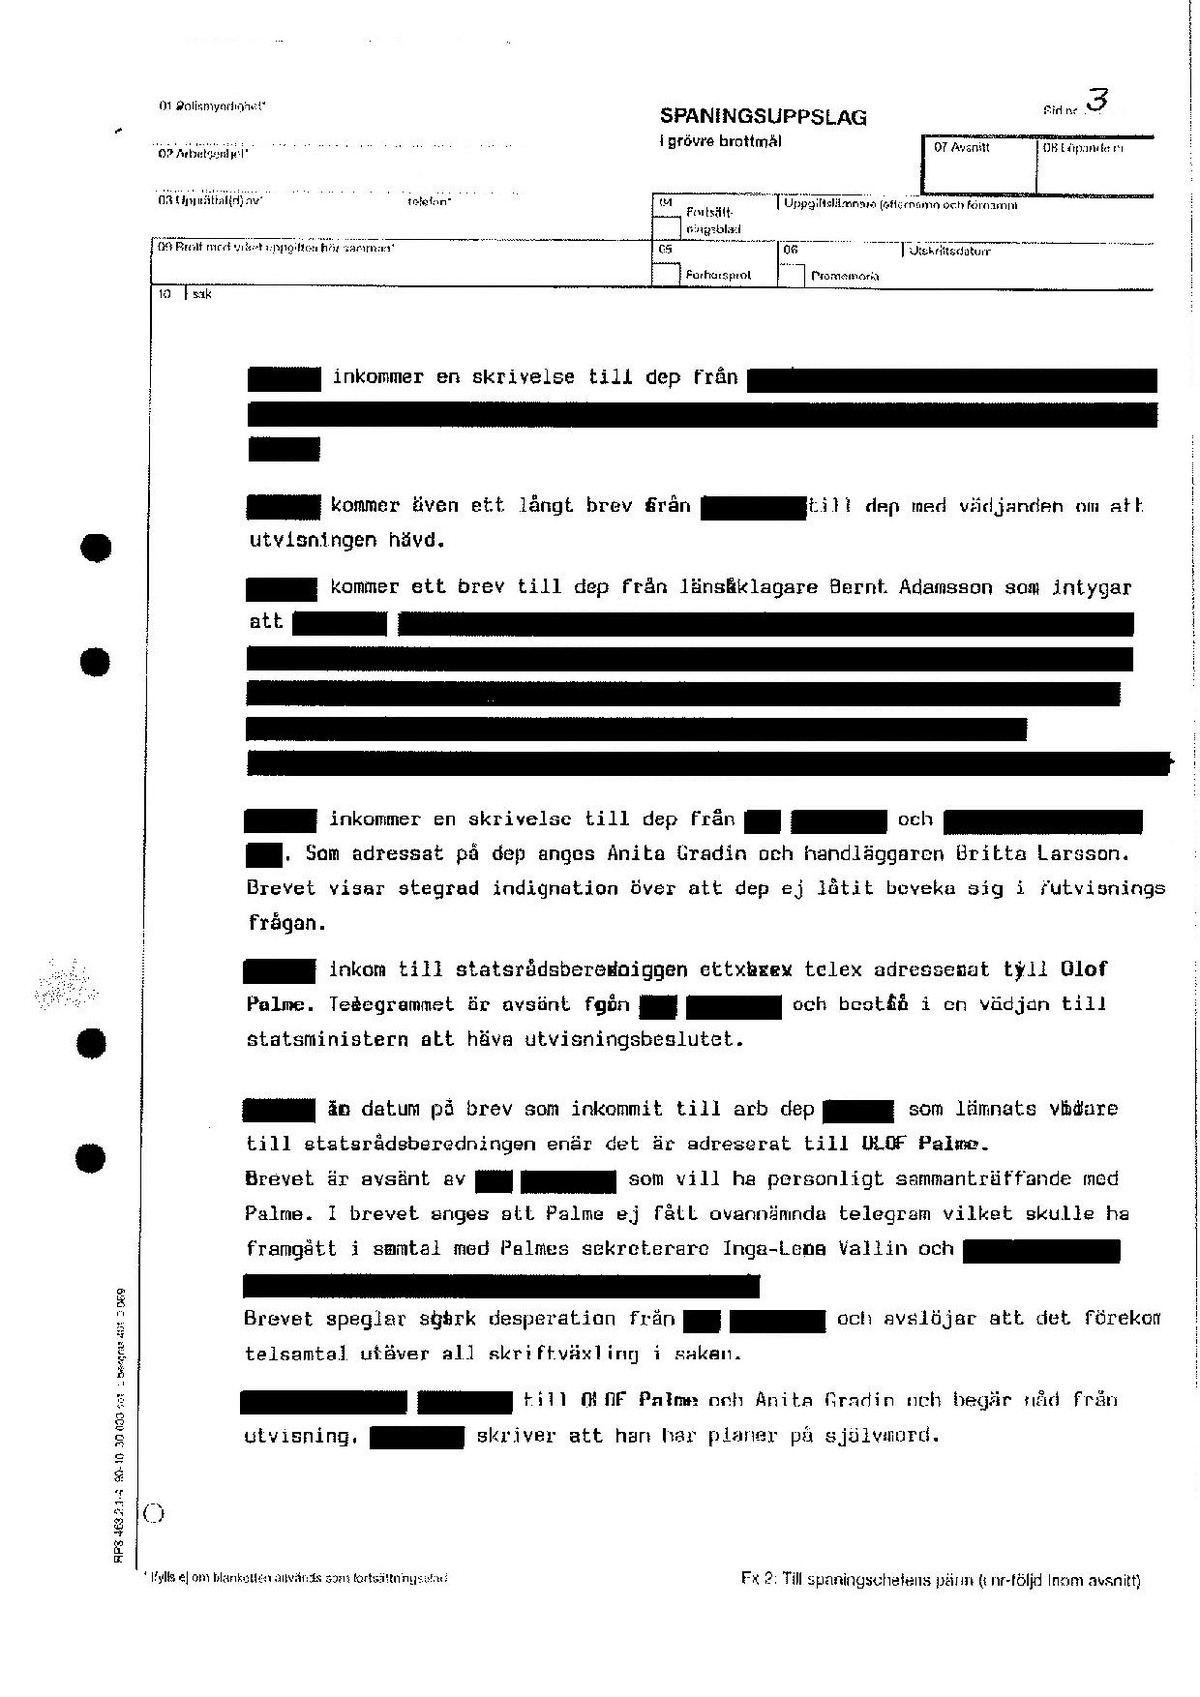 Pol-1991-02-10 I13695-06-A Sala Telefax förhör utvisad jugoslav hotar mörda Palme.pdf